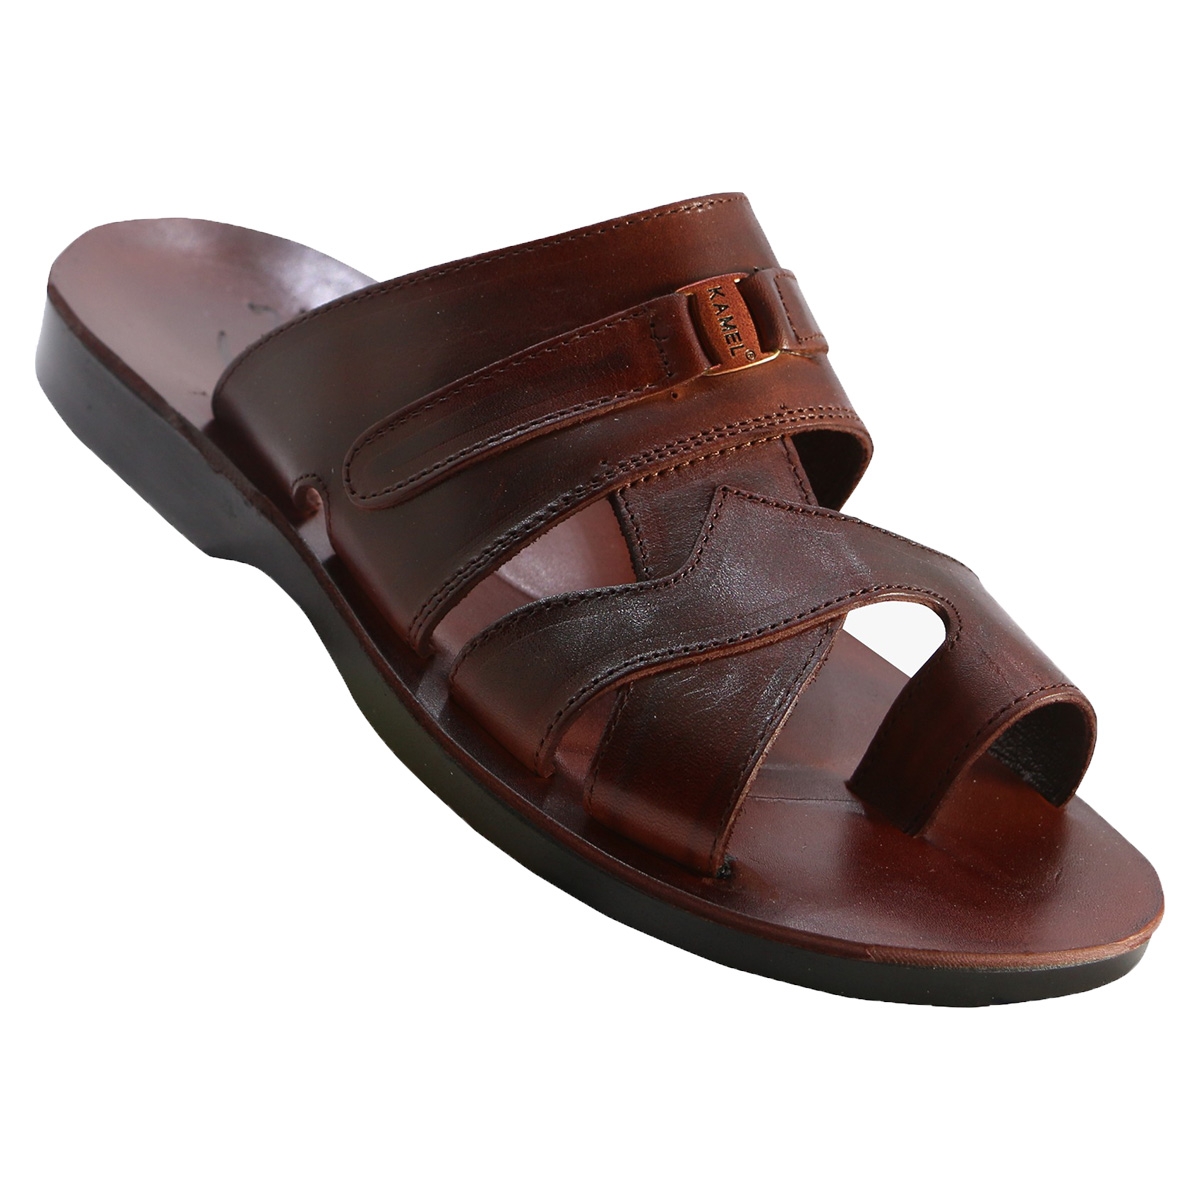 Wilhelm Handmade Leather Jesus Sandals - For Men - 1